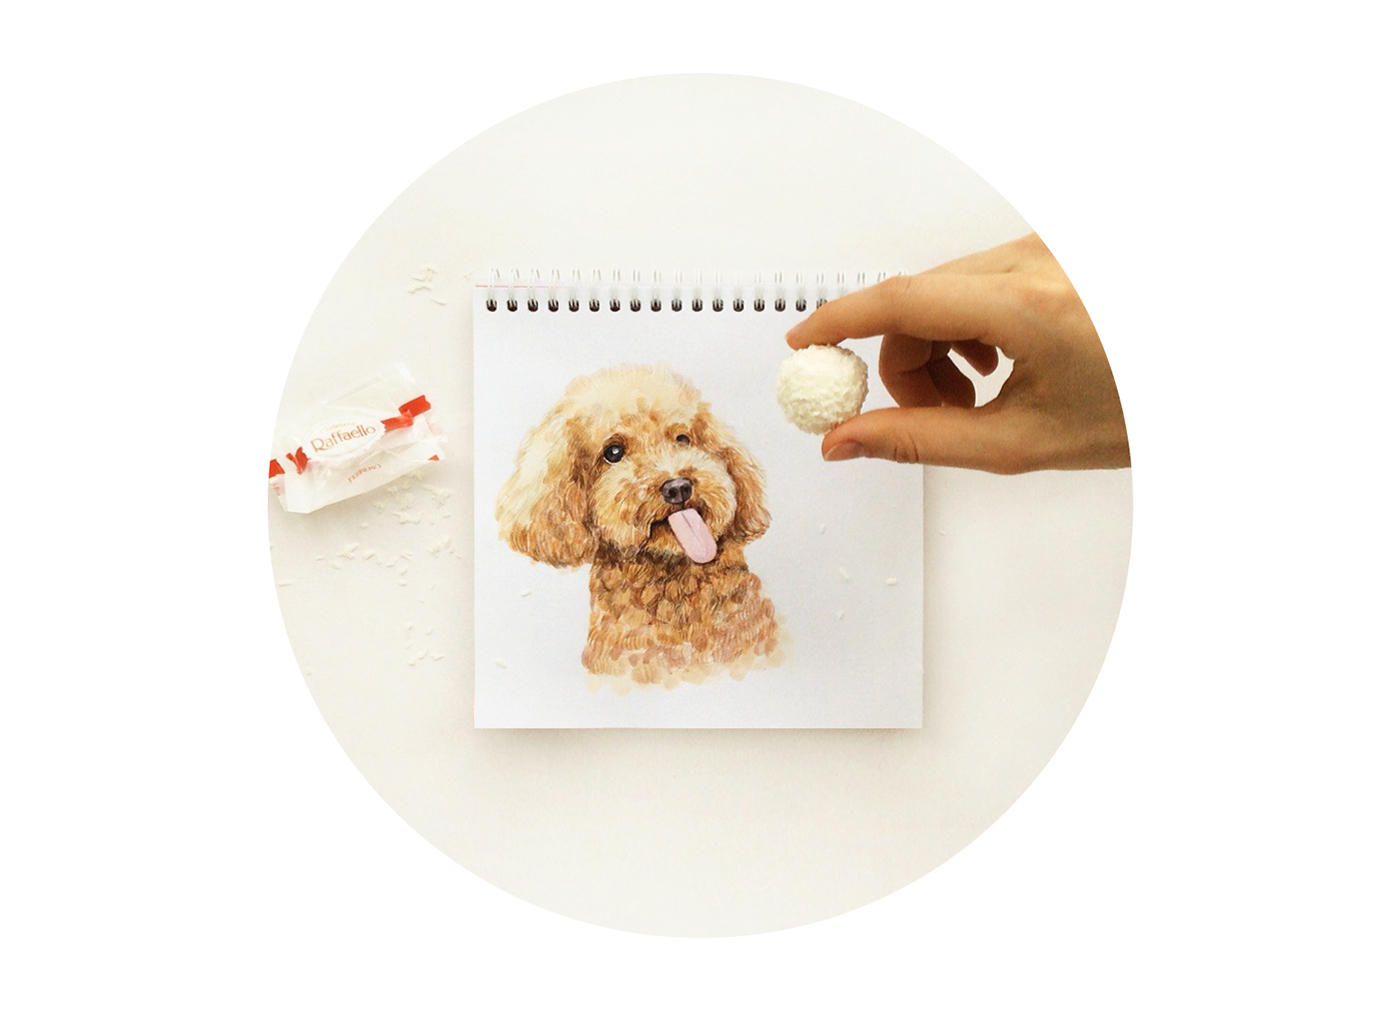 dog interactive dogs illustrations design watercolor photo hand Pet pets animal funny art artwork sketch